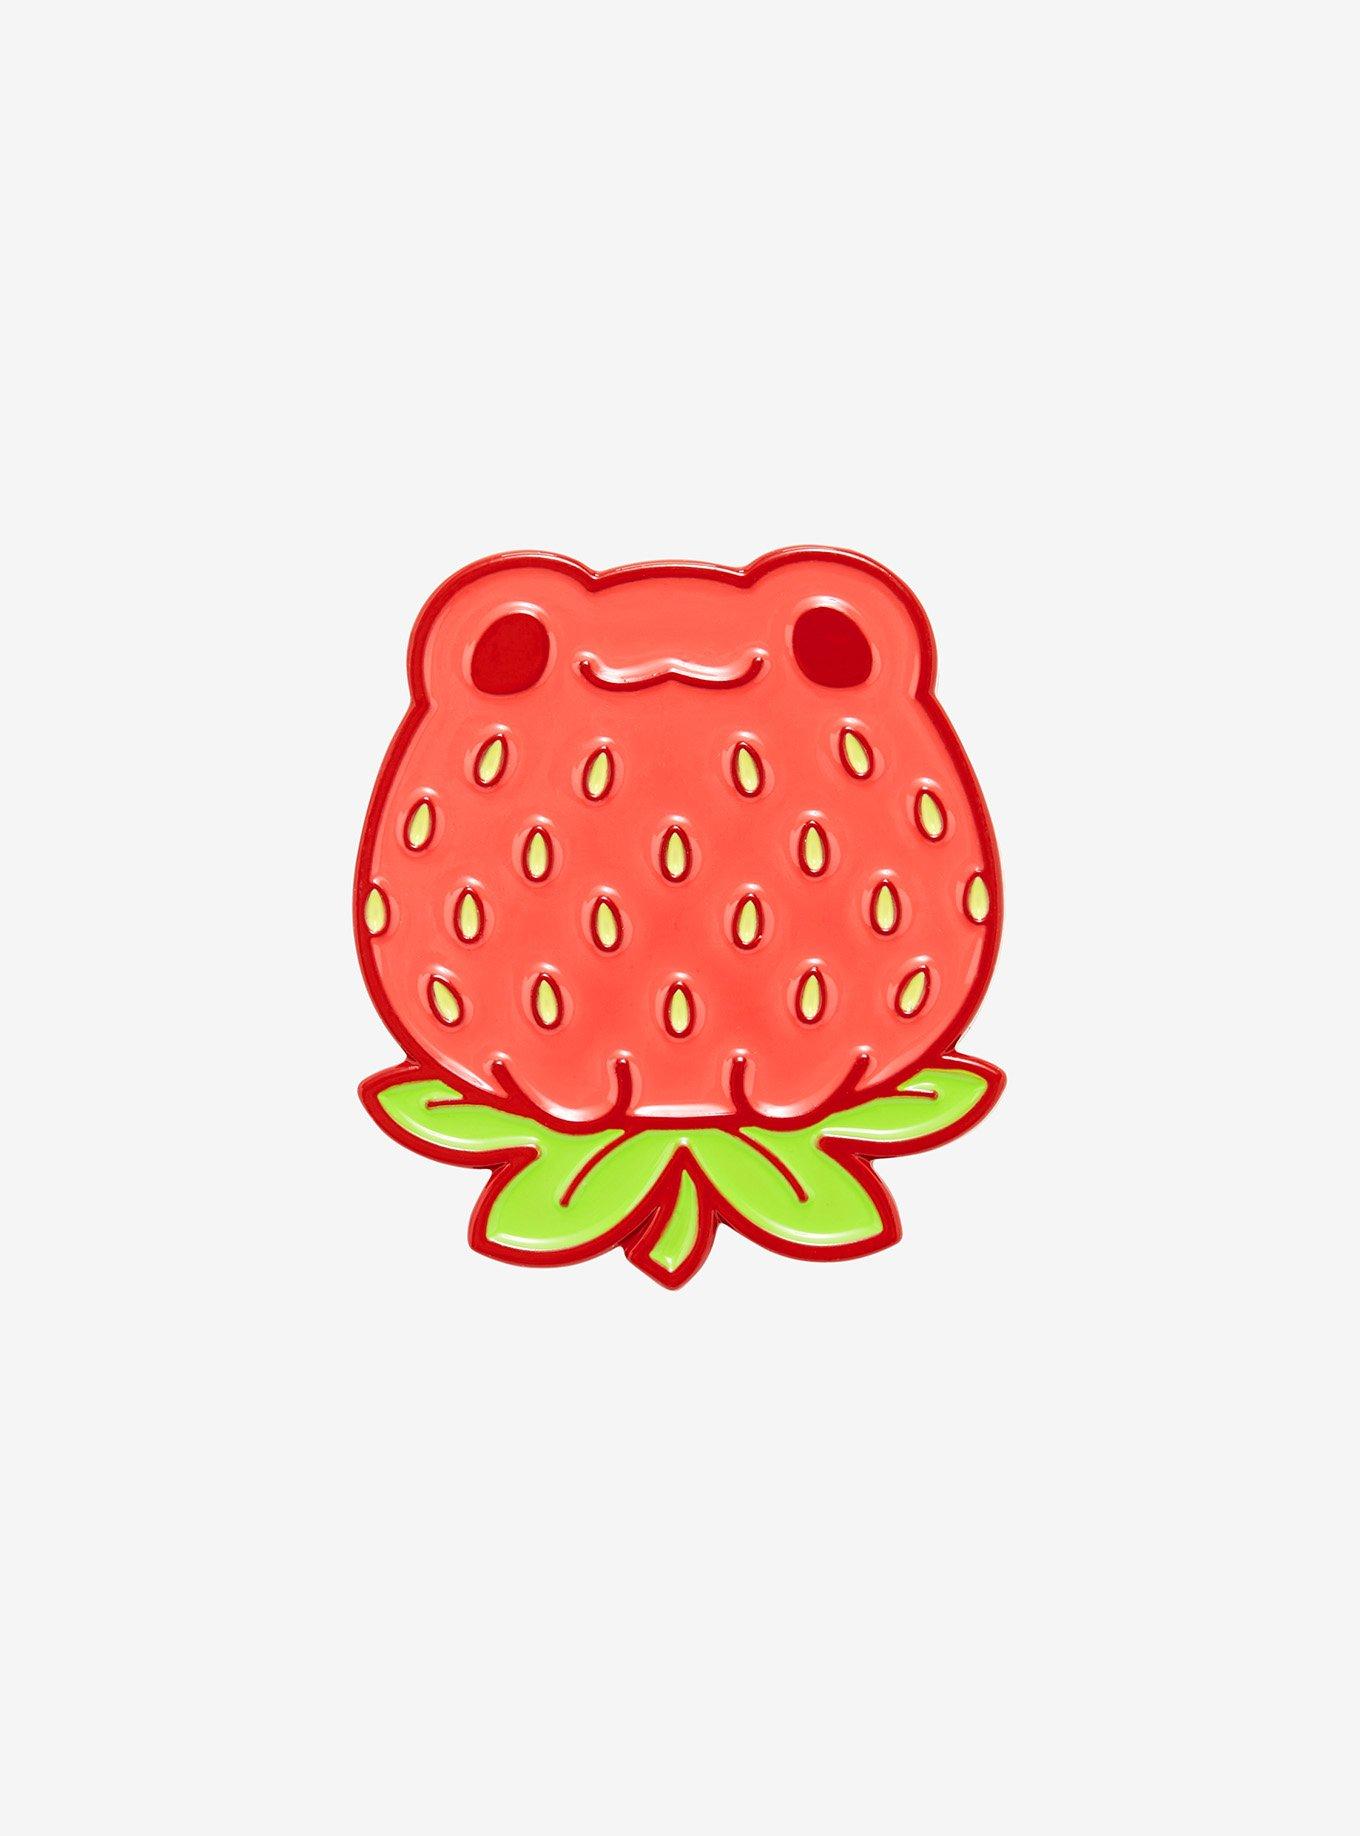 Frog & Strawberry Enamel Pin